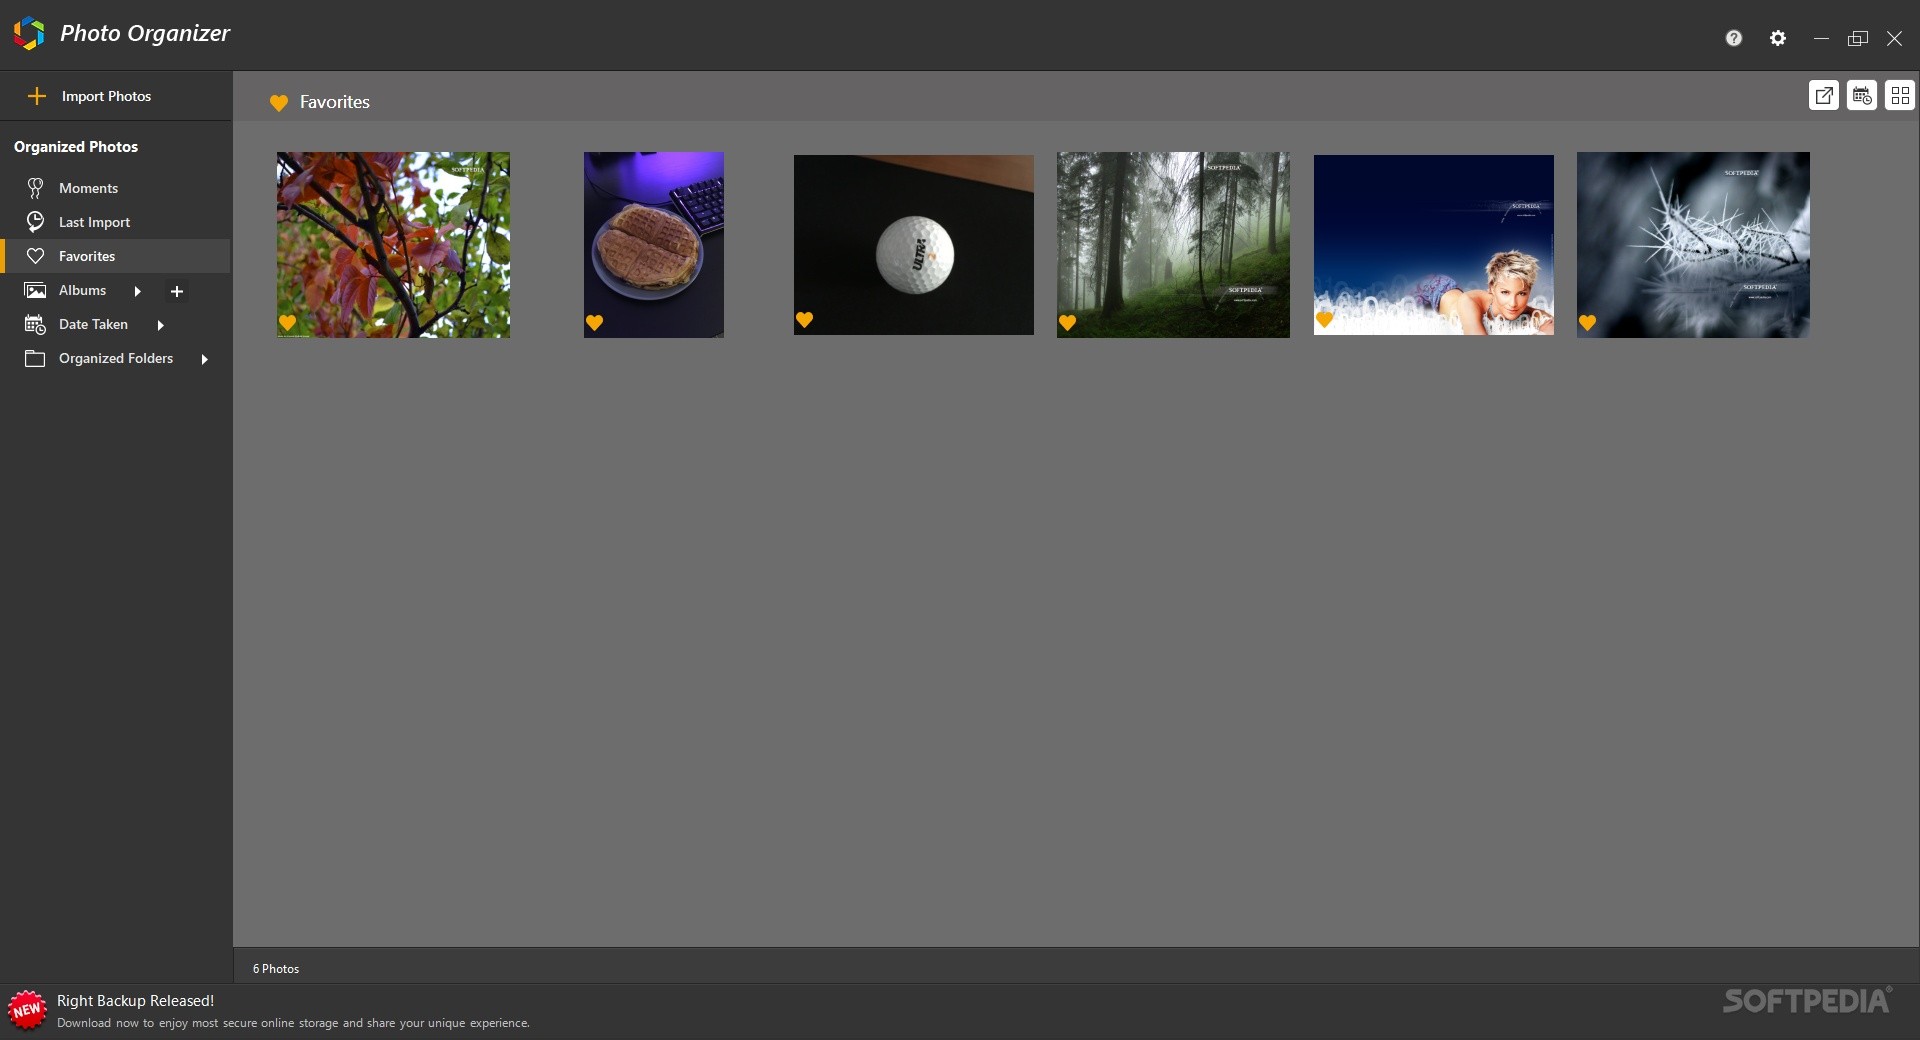 Inboard 1 0 – image screenshot and photo organizer software